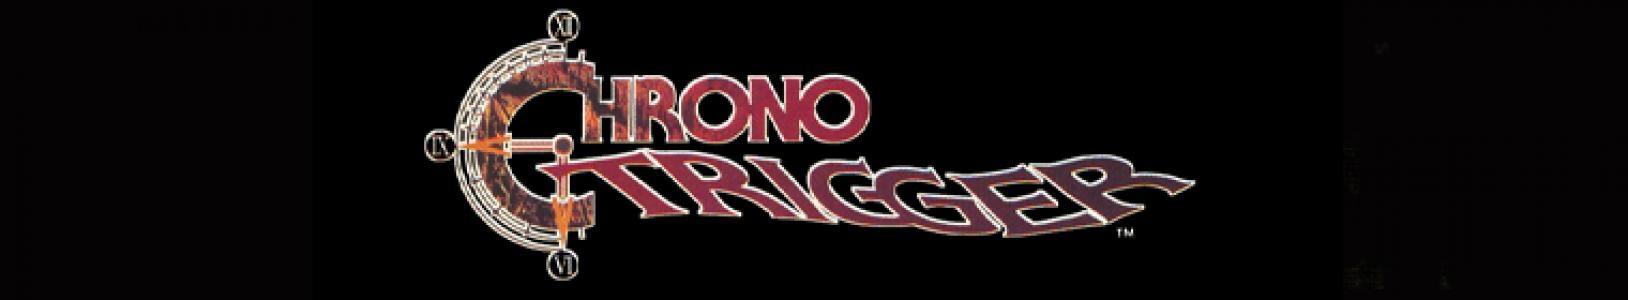 Chrono Trigger banner